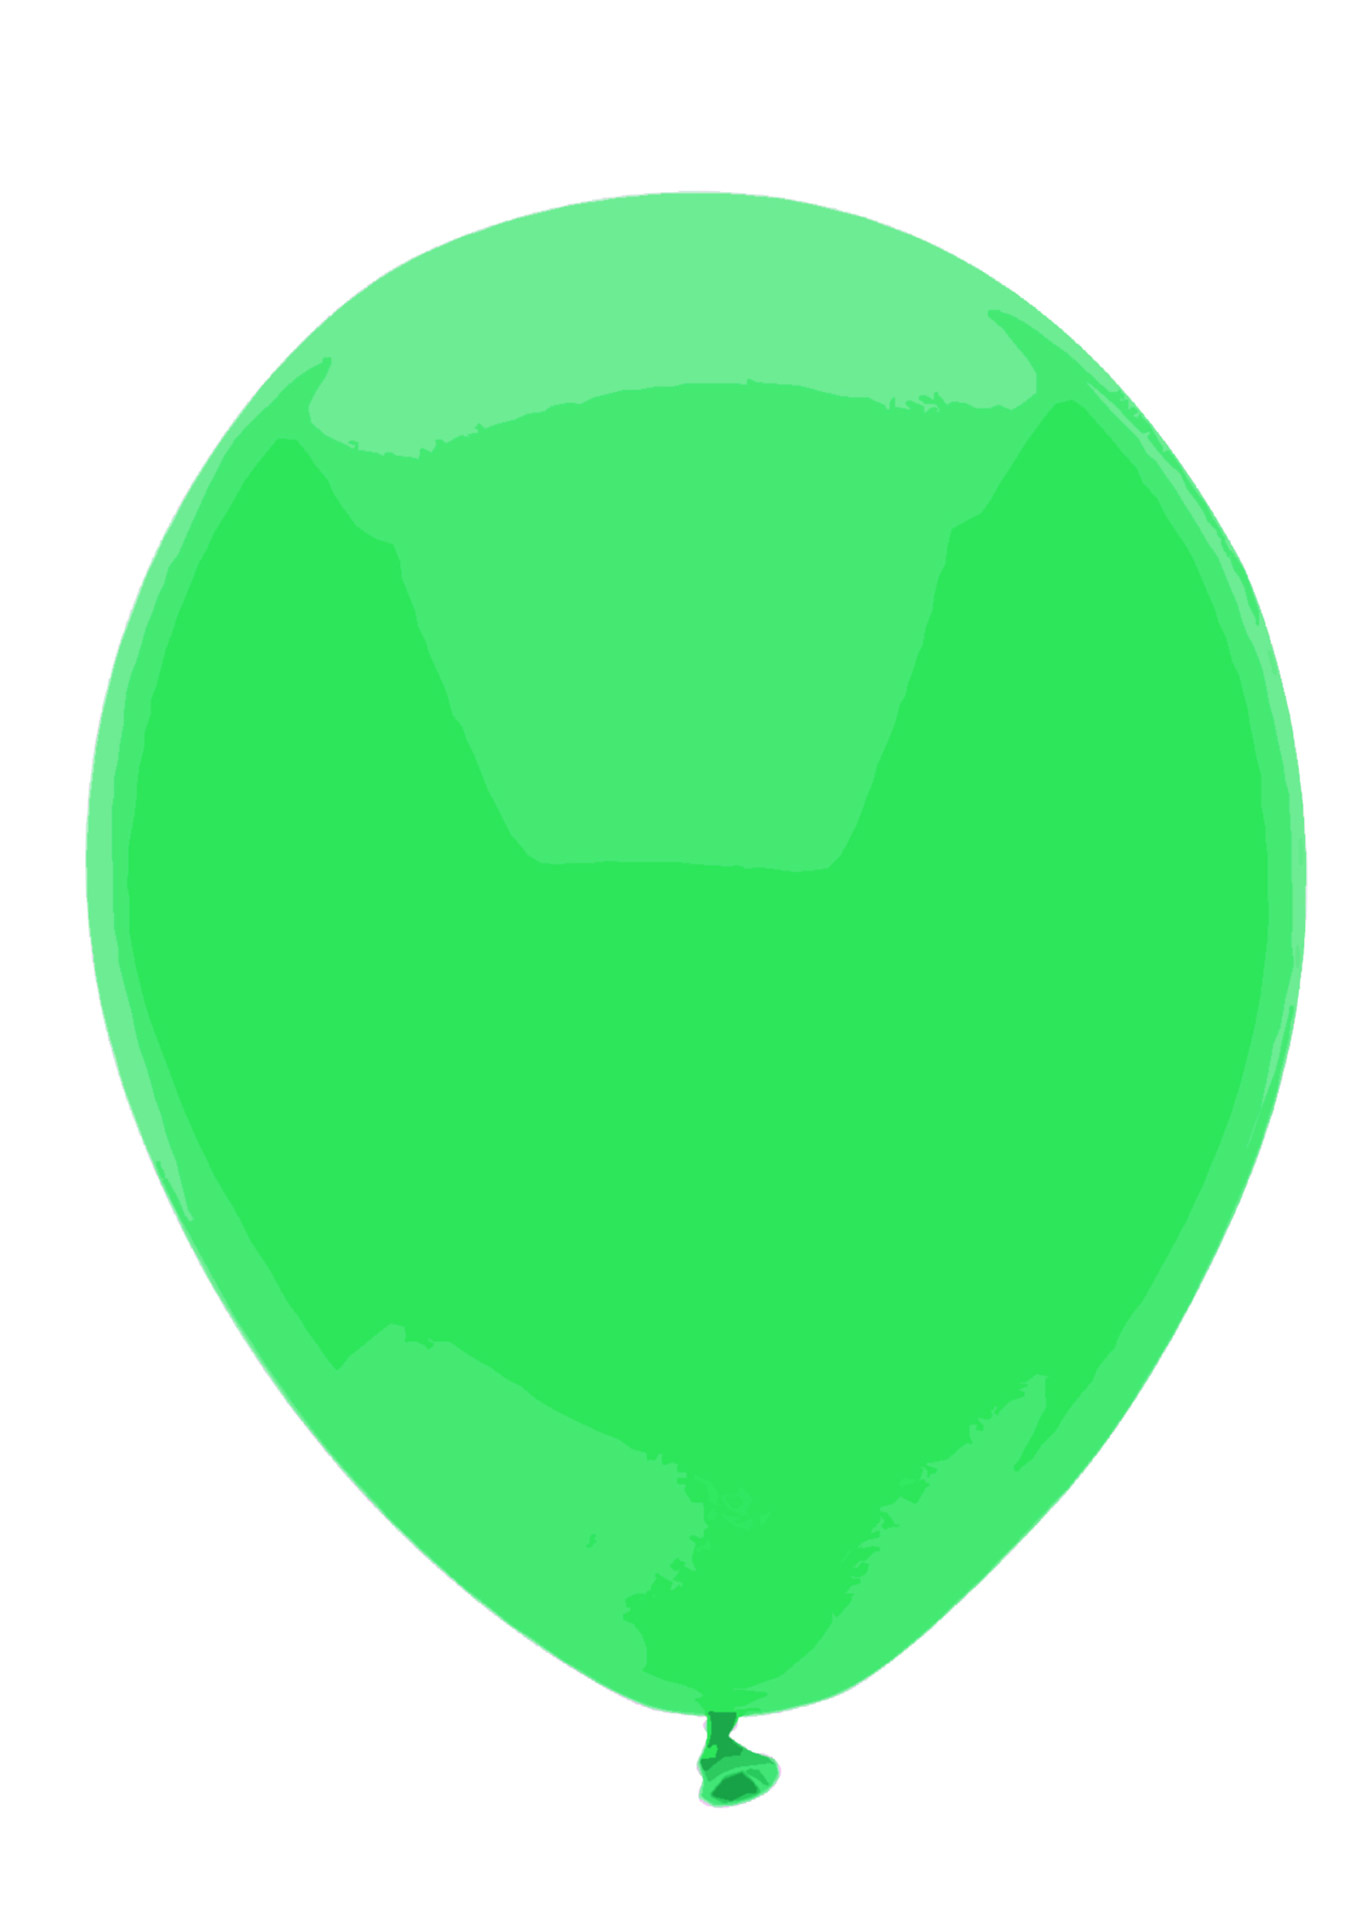 Игры зеленый шар. Зеленый шарик. Воздушный шарик. Зеленый воздушный шар. Салатовый шарик.